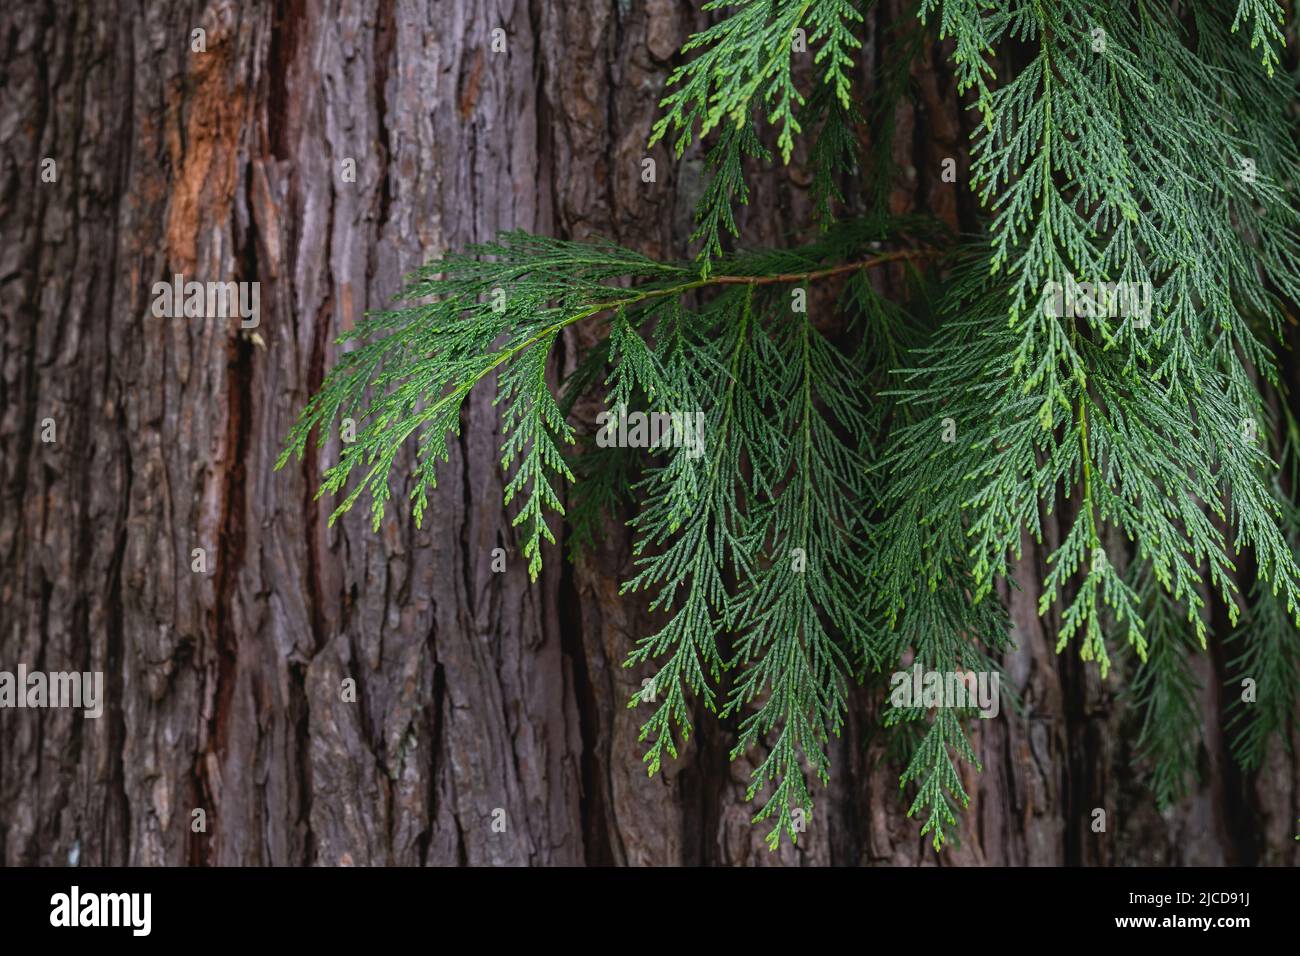 Lawson cypress (Chamaecyparis lawsoniana) evergreen foliage and bark detail Stock Photo